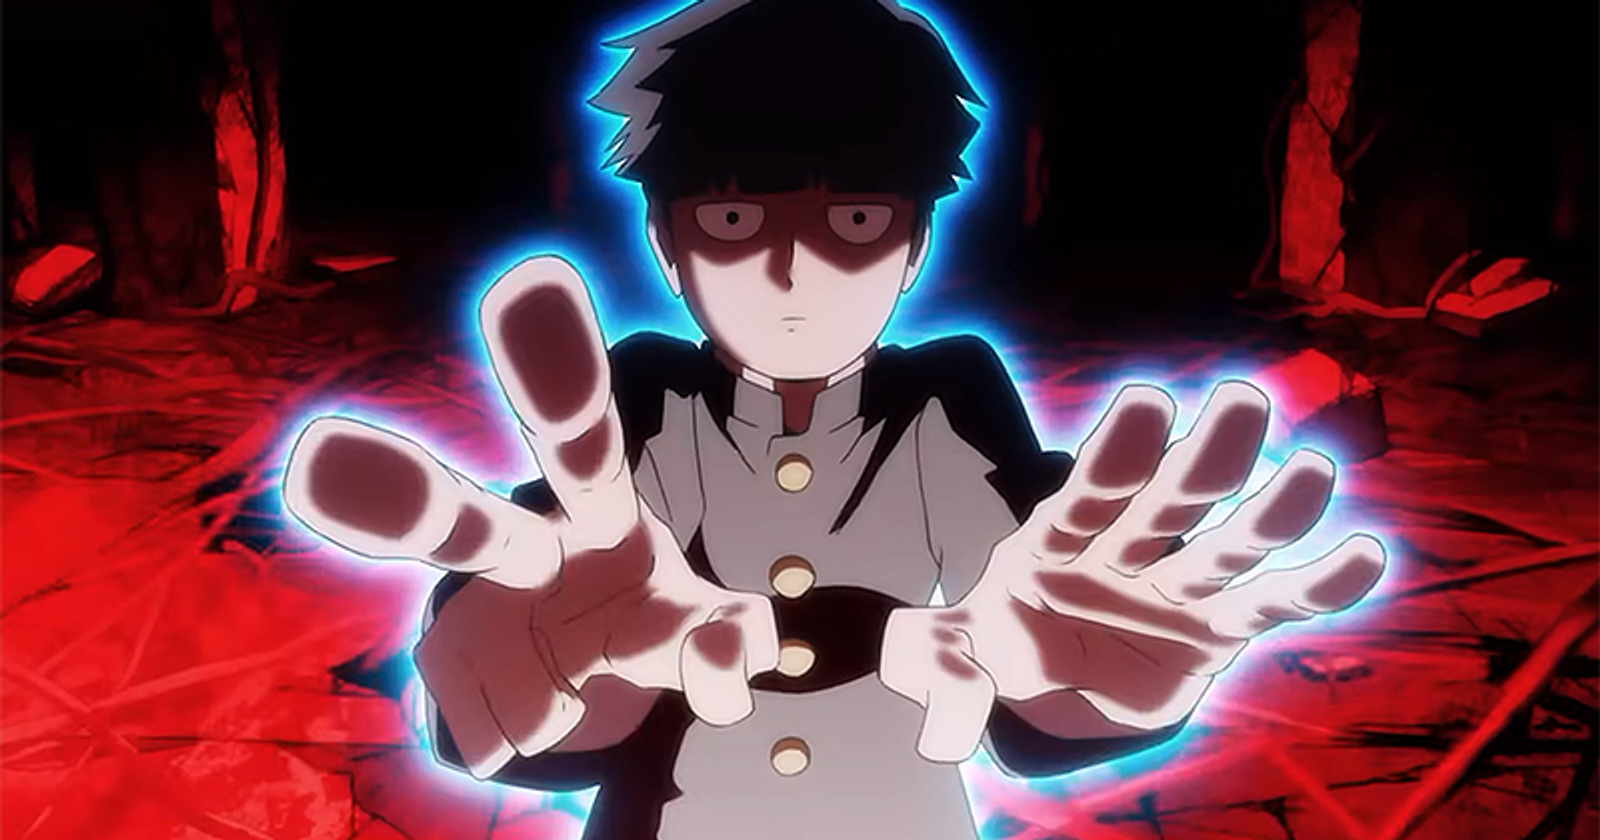 Mob Psycho 100 season 3 keeps interrogating anime's power dynamics - Polygon